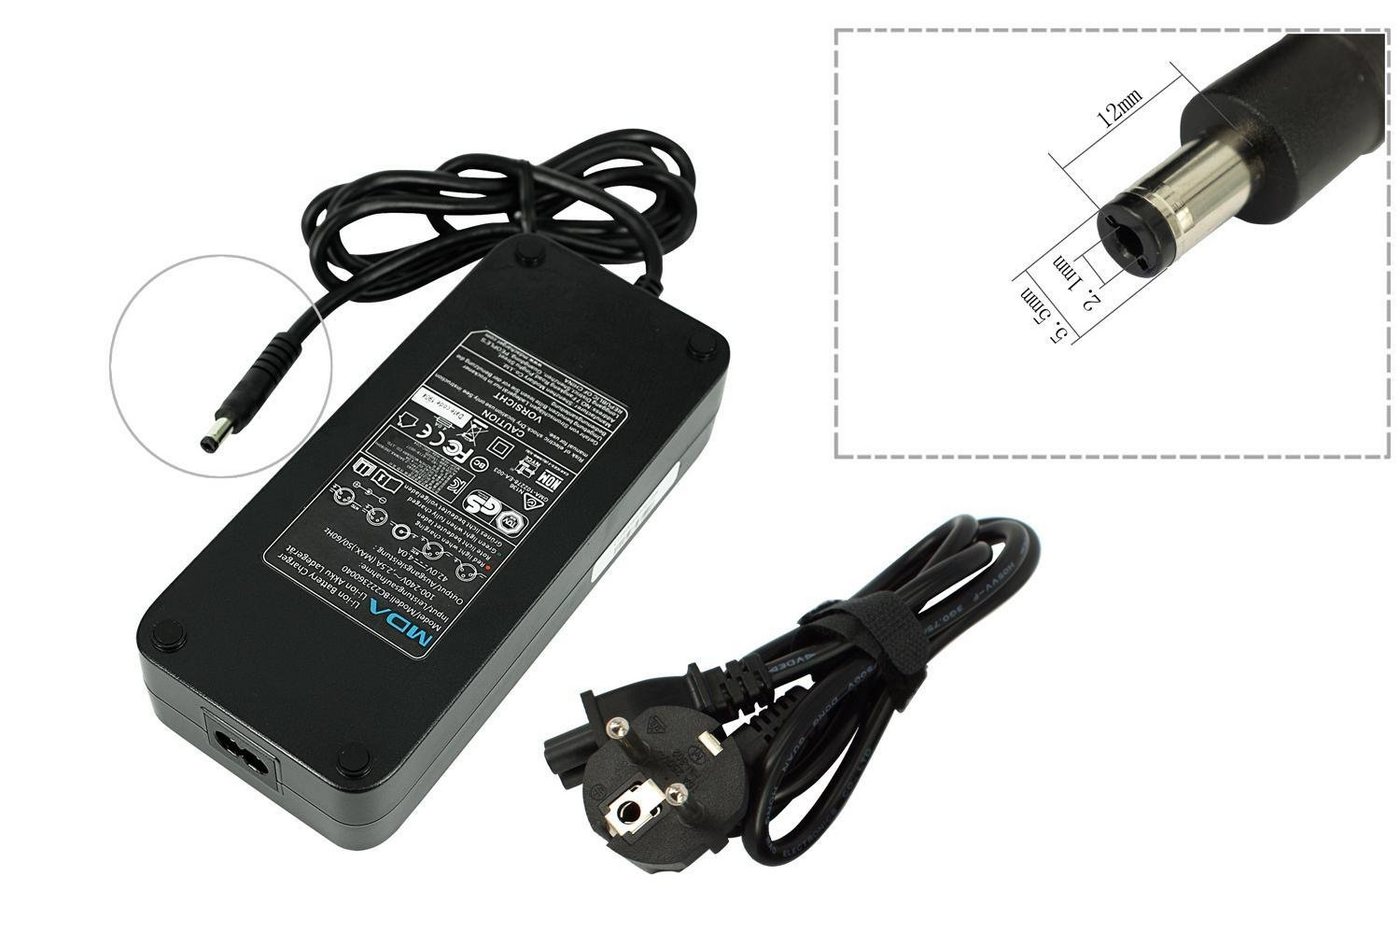 PowerSmart CM160L1004E.001 Batterie-Ladegerät (4,0 A (Ausgangsstrom) für 36 V Elektrofahrrad Bafang BC B301, BC B201) von PowerSmart